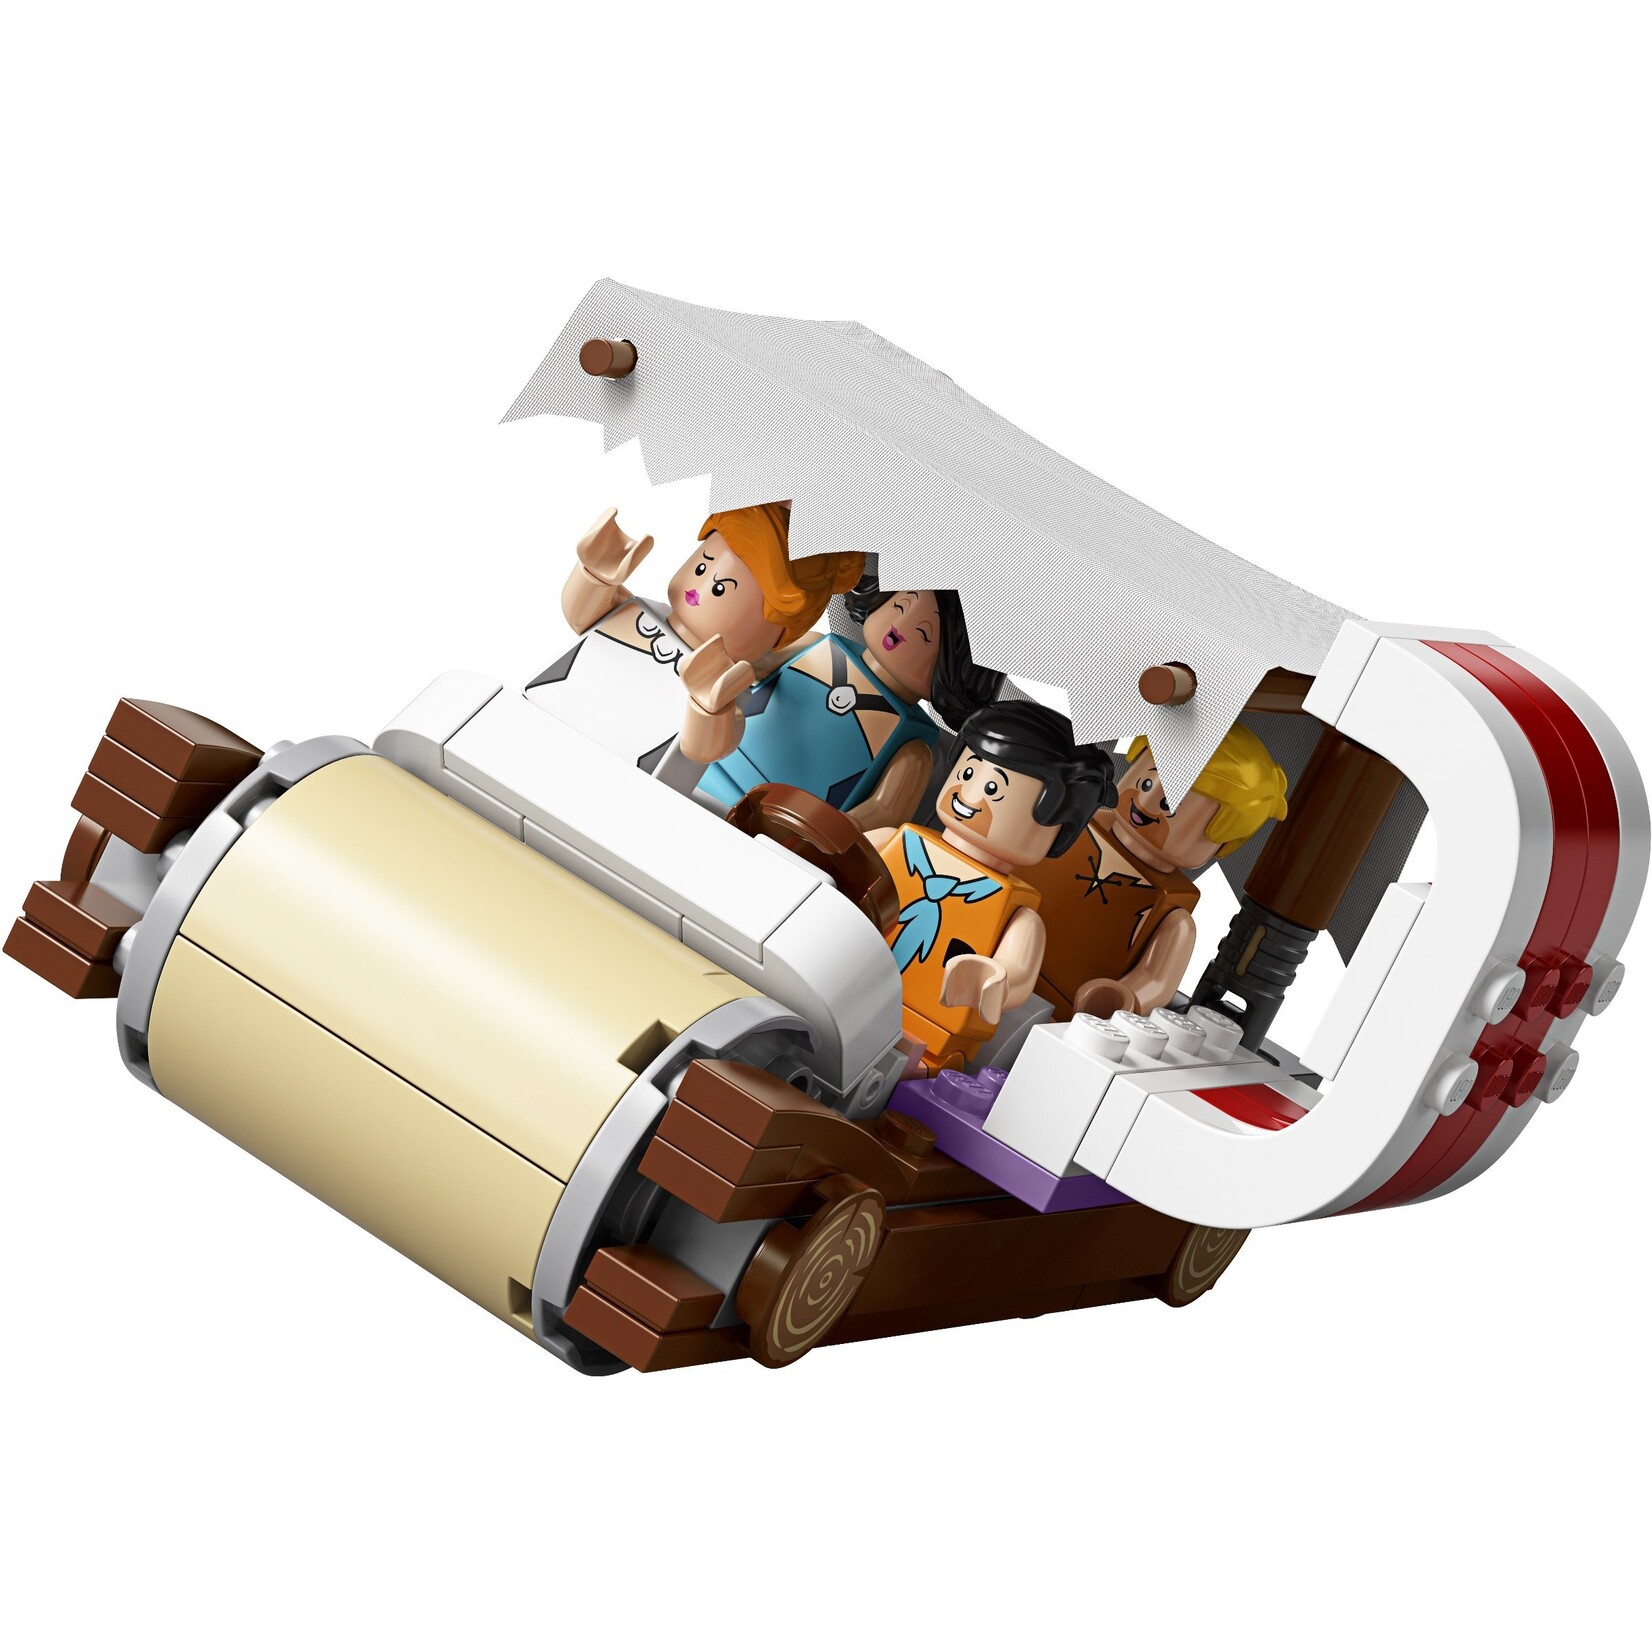 LEGO The Flintstones - 21316